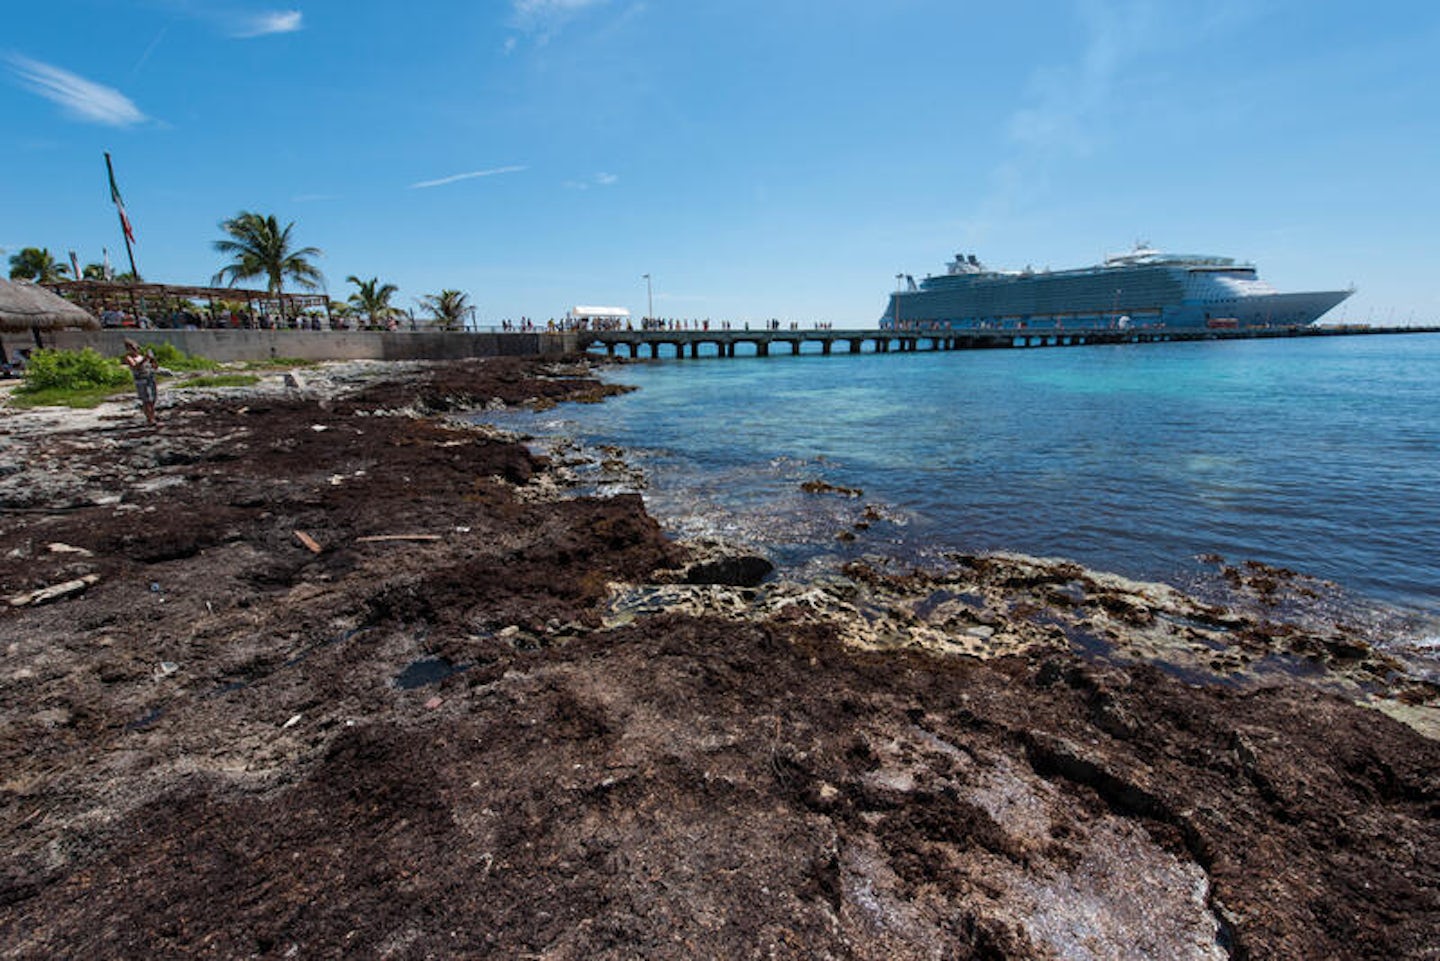 Costa Maya Port